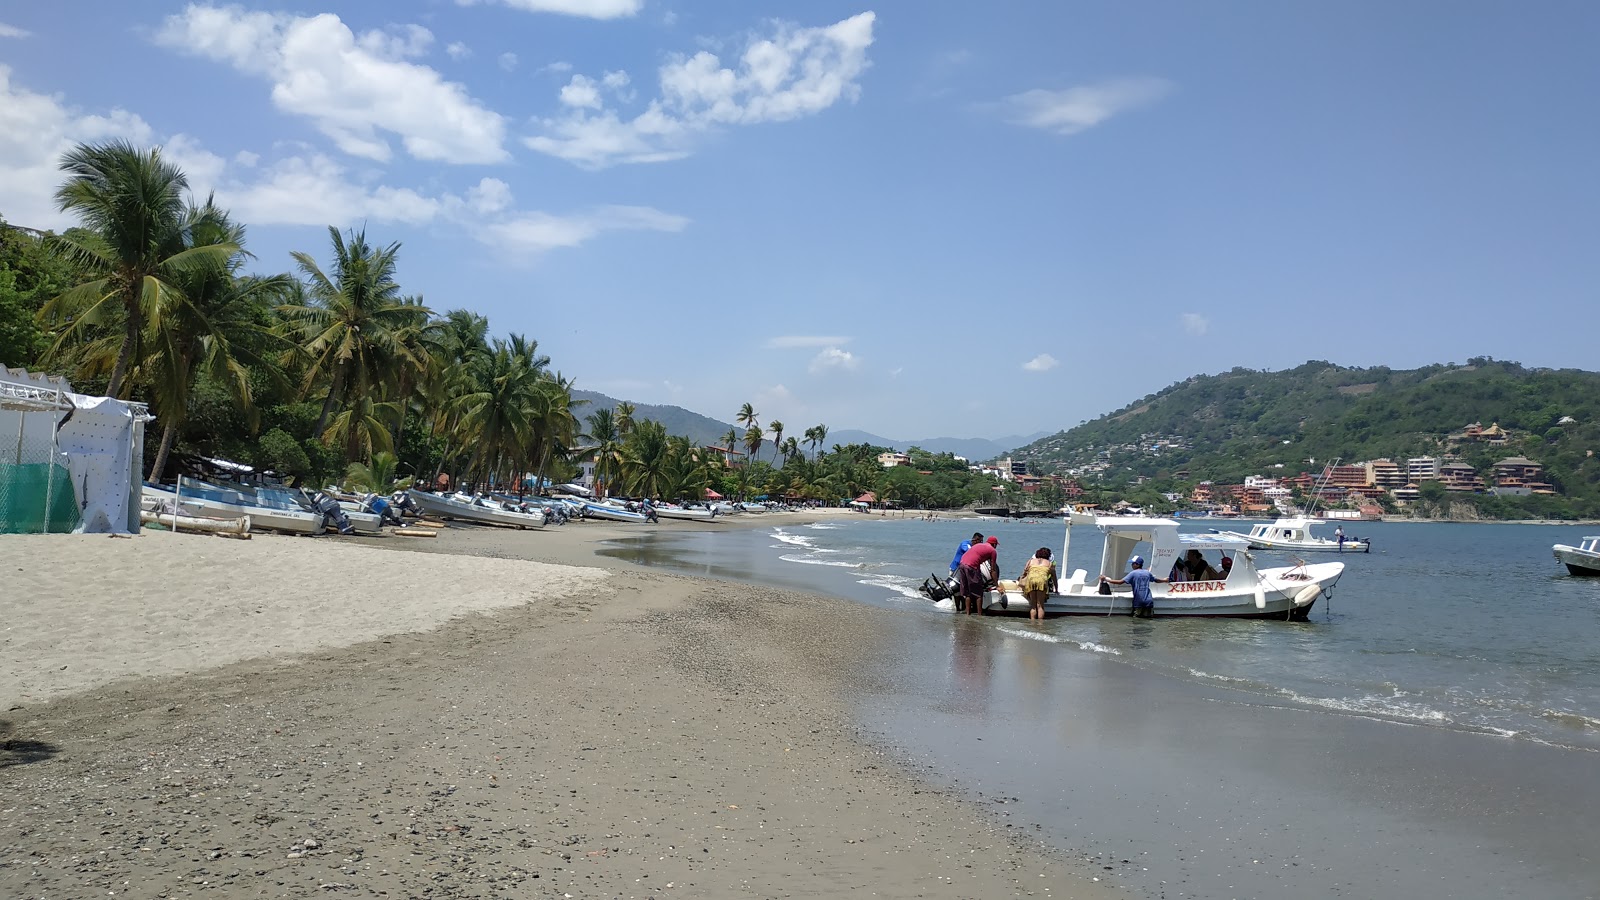 Zihuatanejo beach'in fotoğrafı geniş plaj ile birlikte